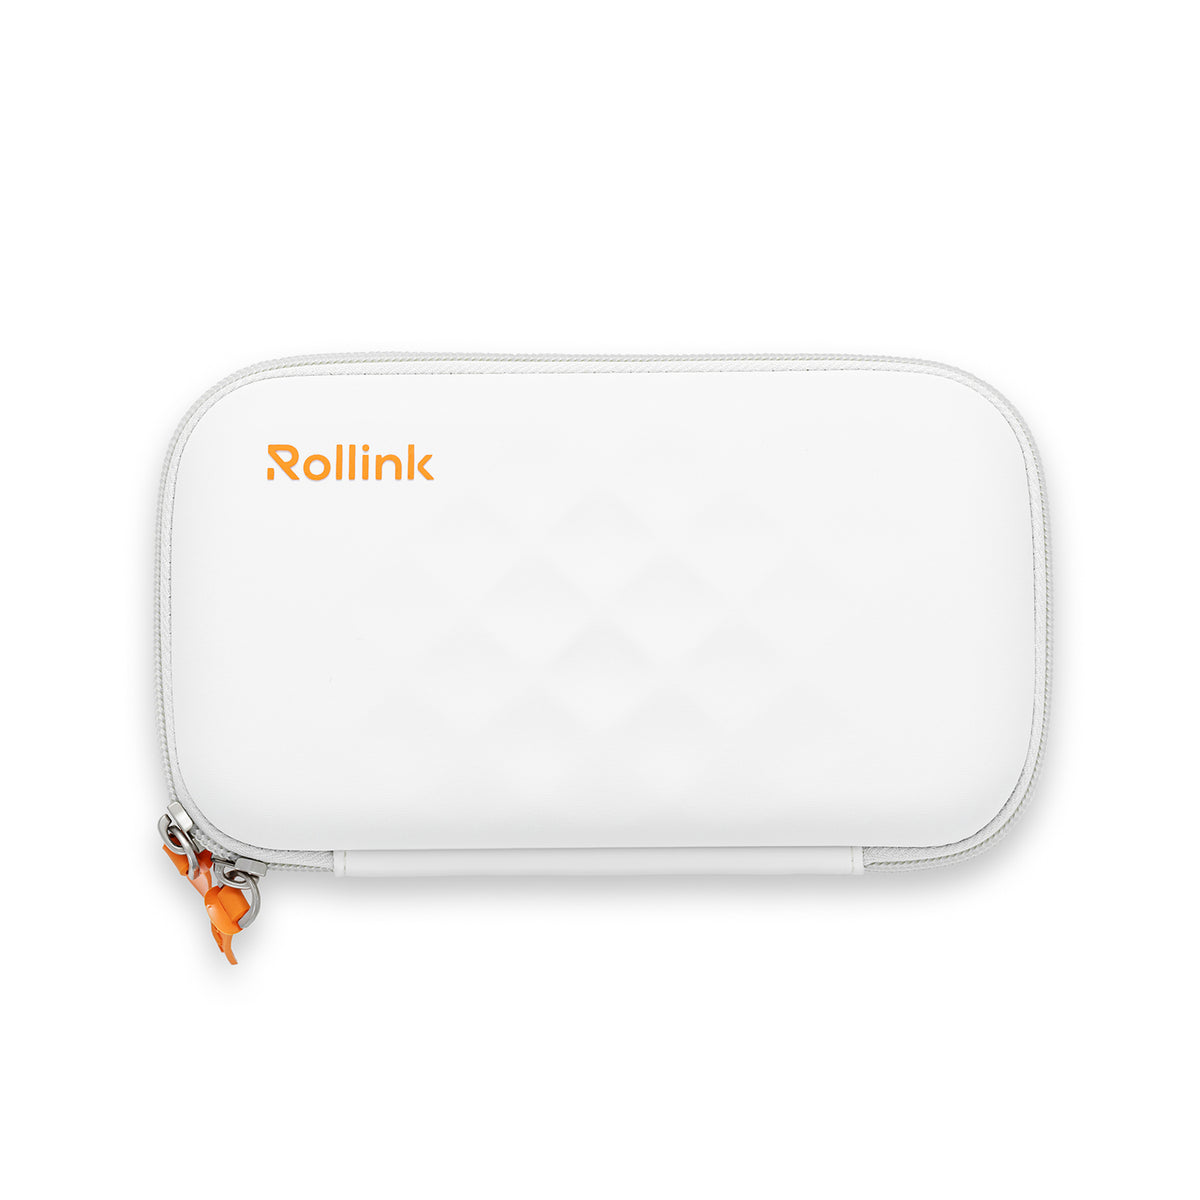 Rollink Tour Mini Bag